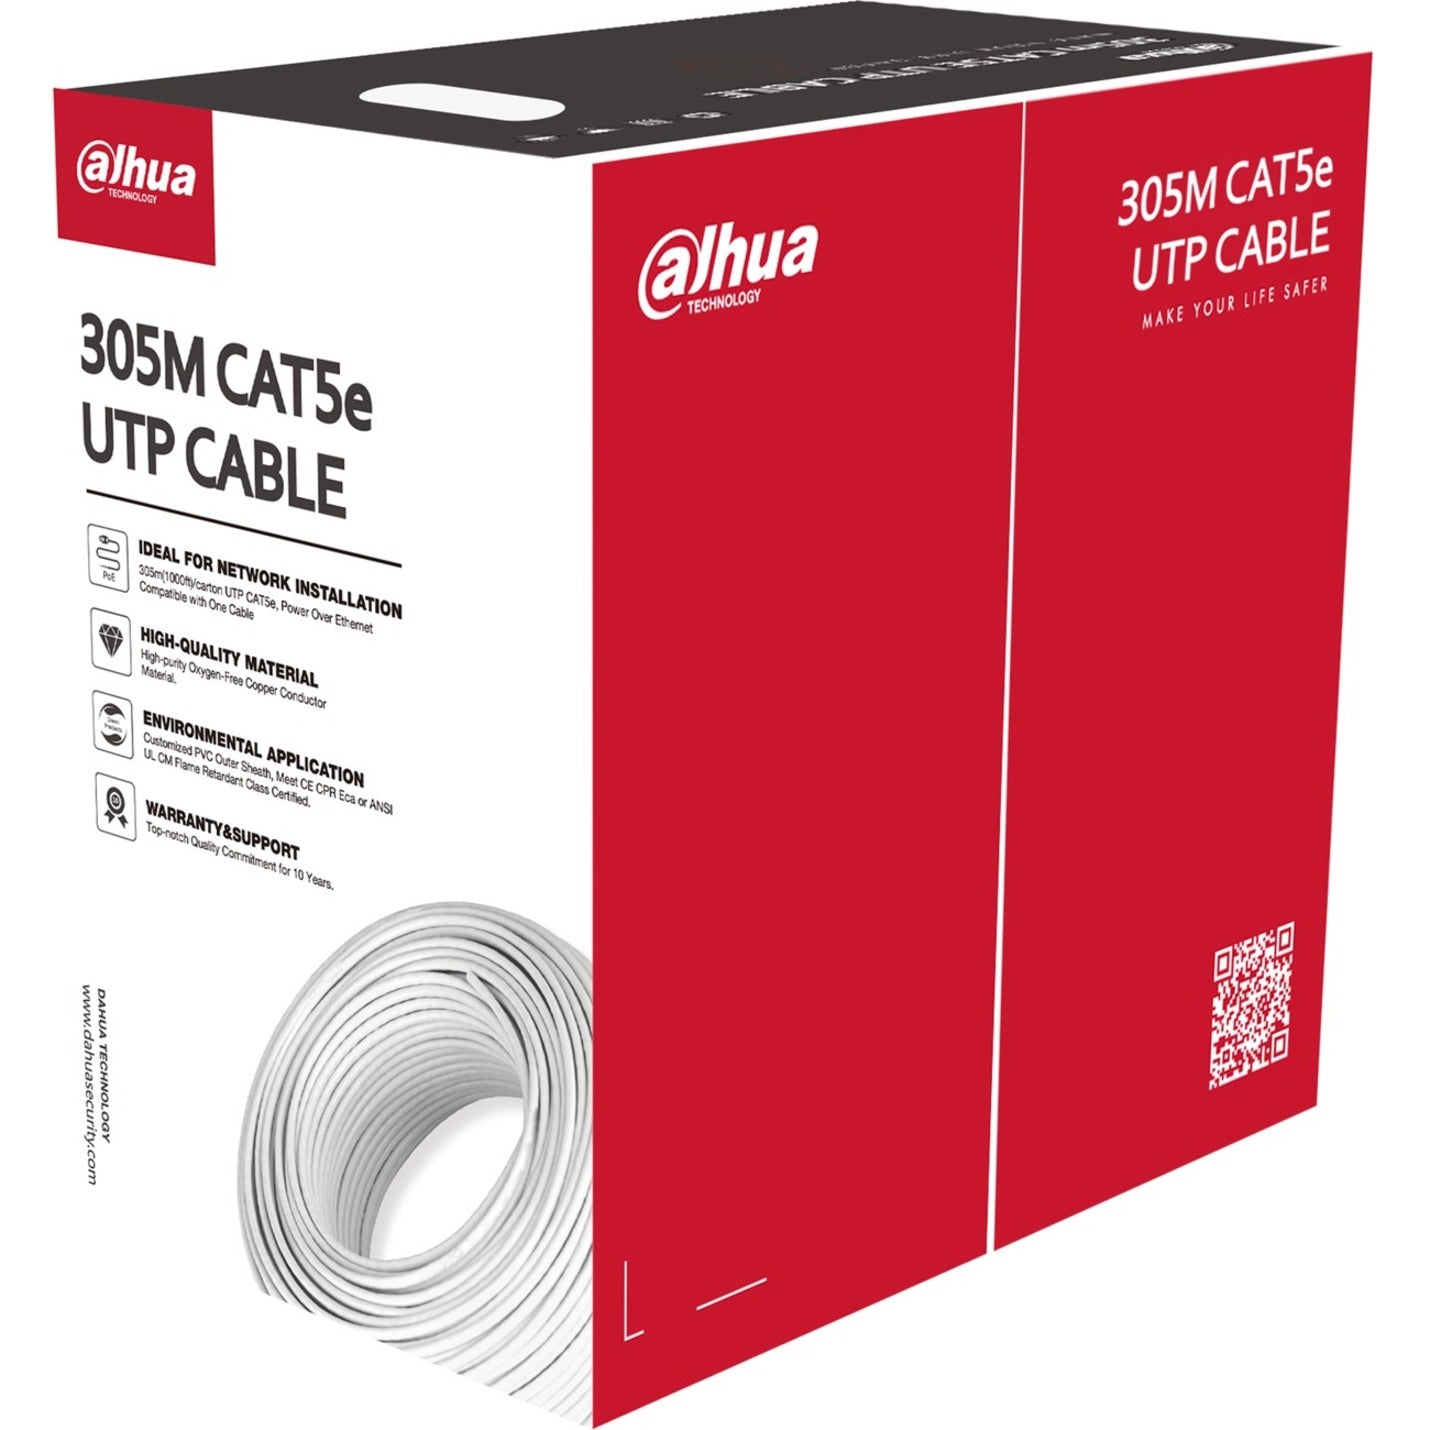 Dahua DH-PFM920I-5EU-U UTP CAT5e Cable, 10 Year Limited Warranty, Heat Resistant, PoE, Flame Retardant